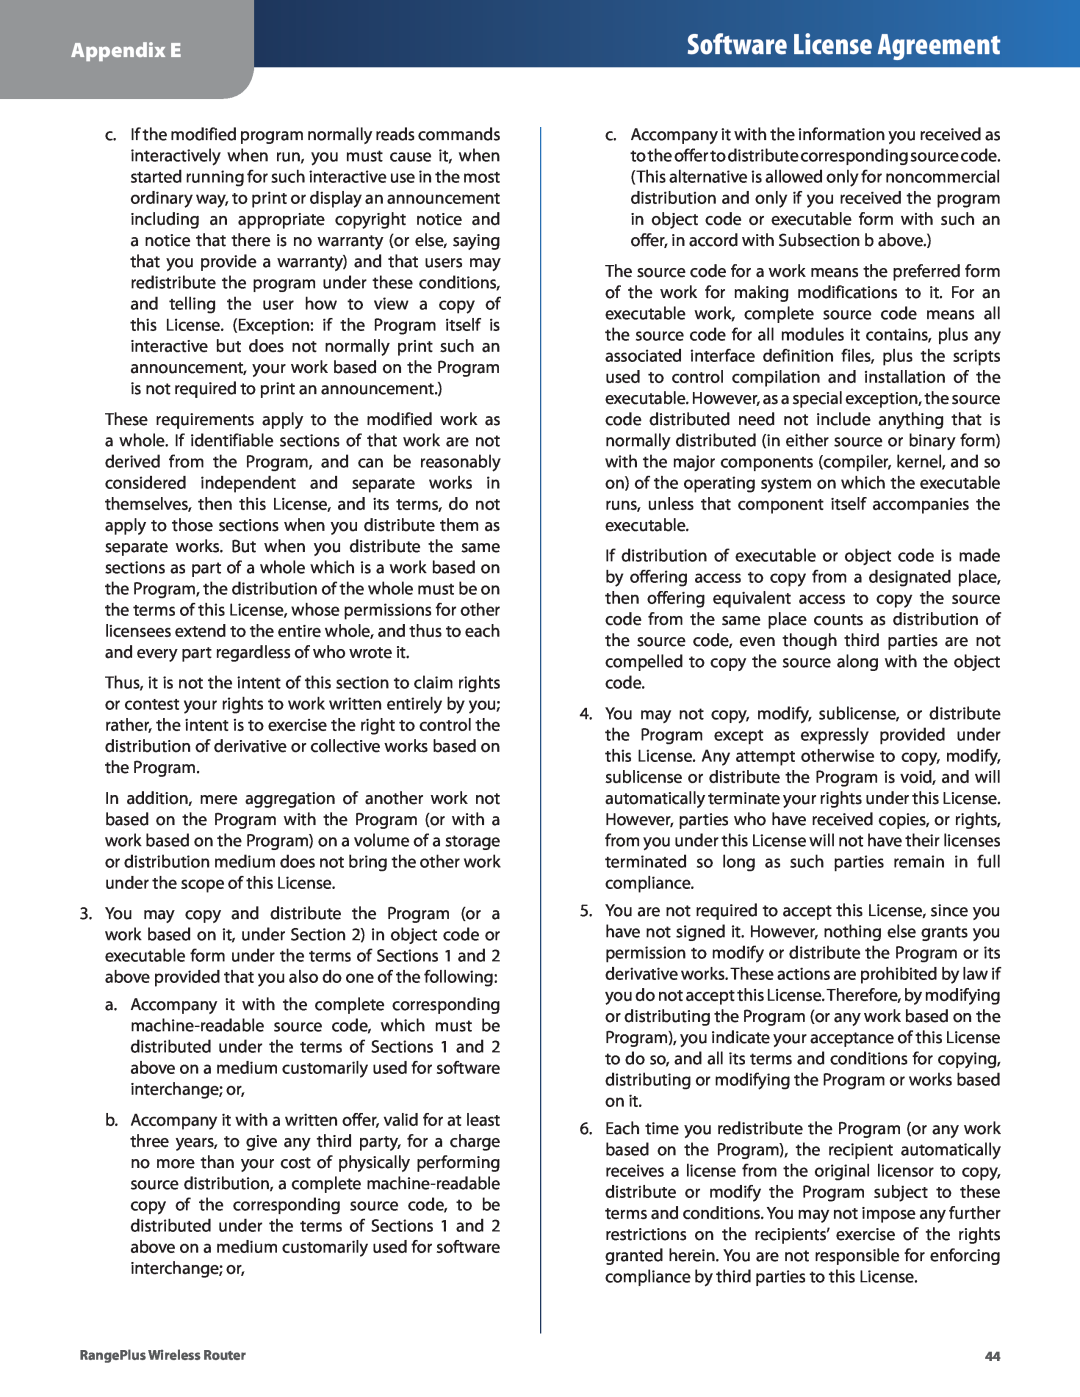 Cisco Systems WRT110 manual Software License Agreement, Appendix E 